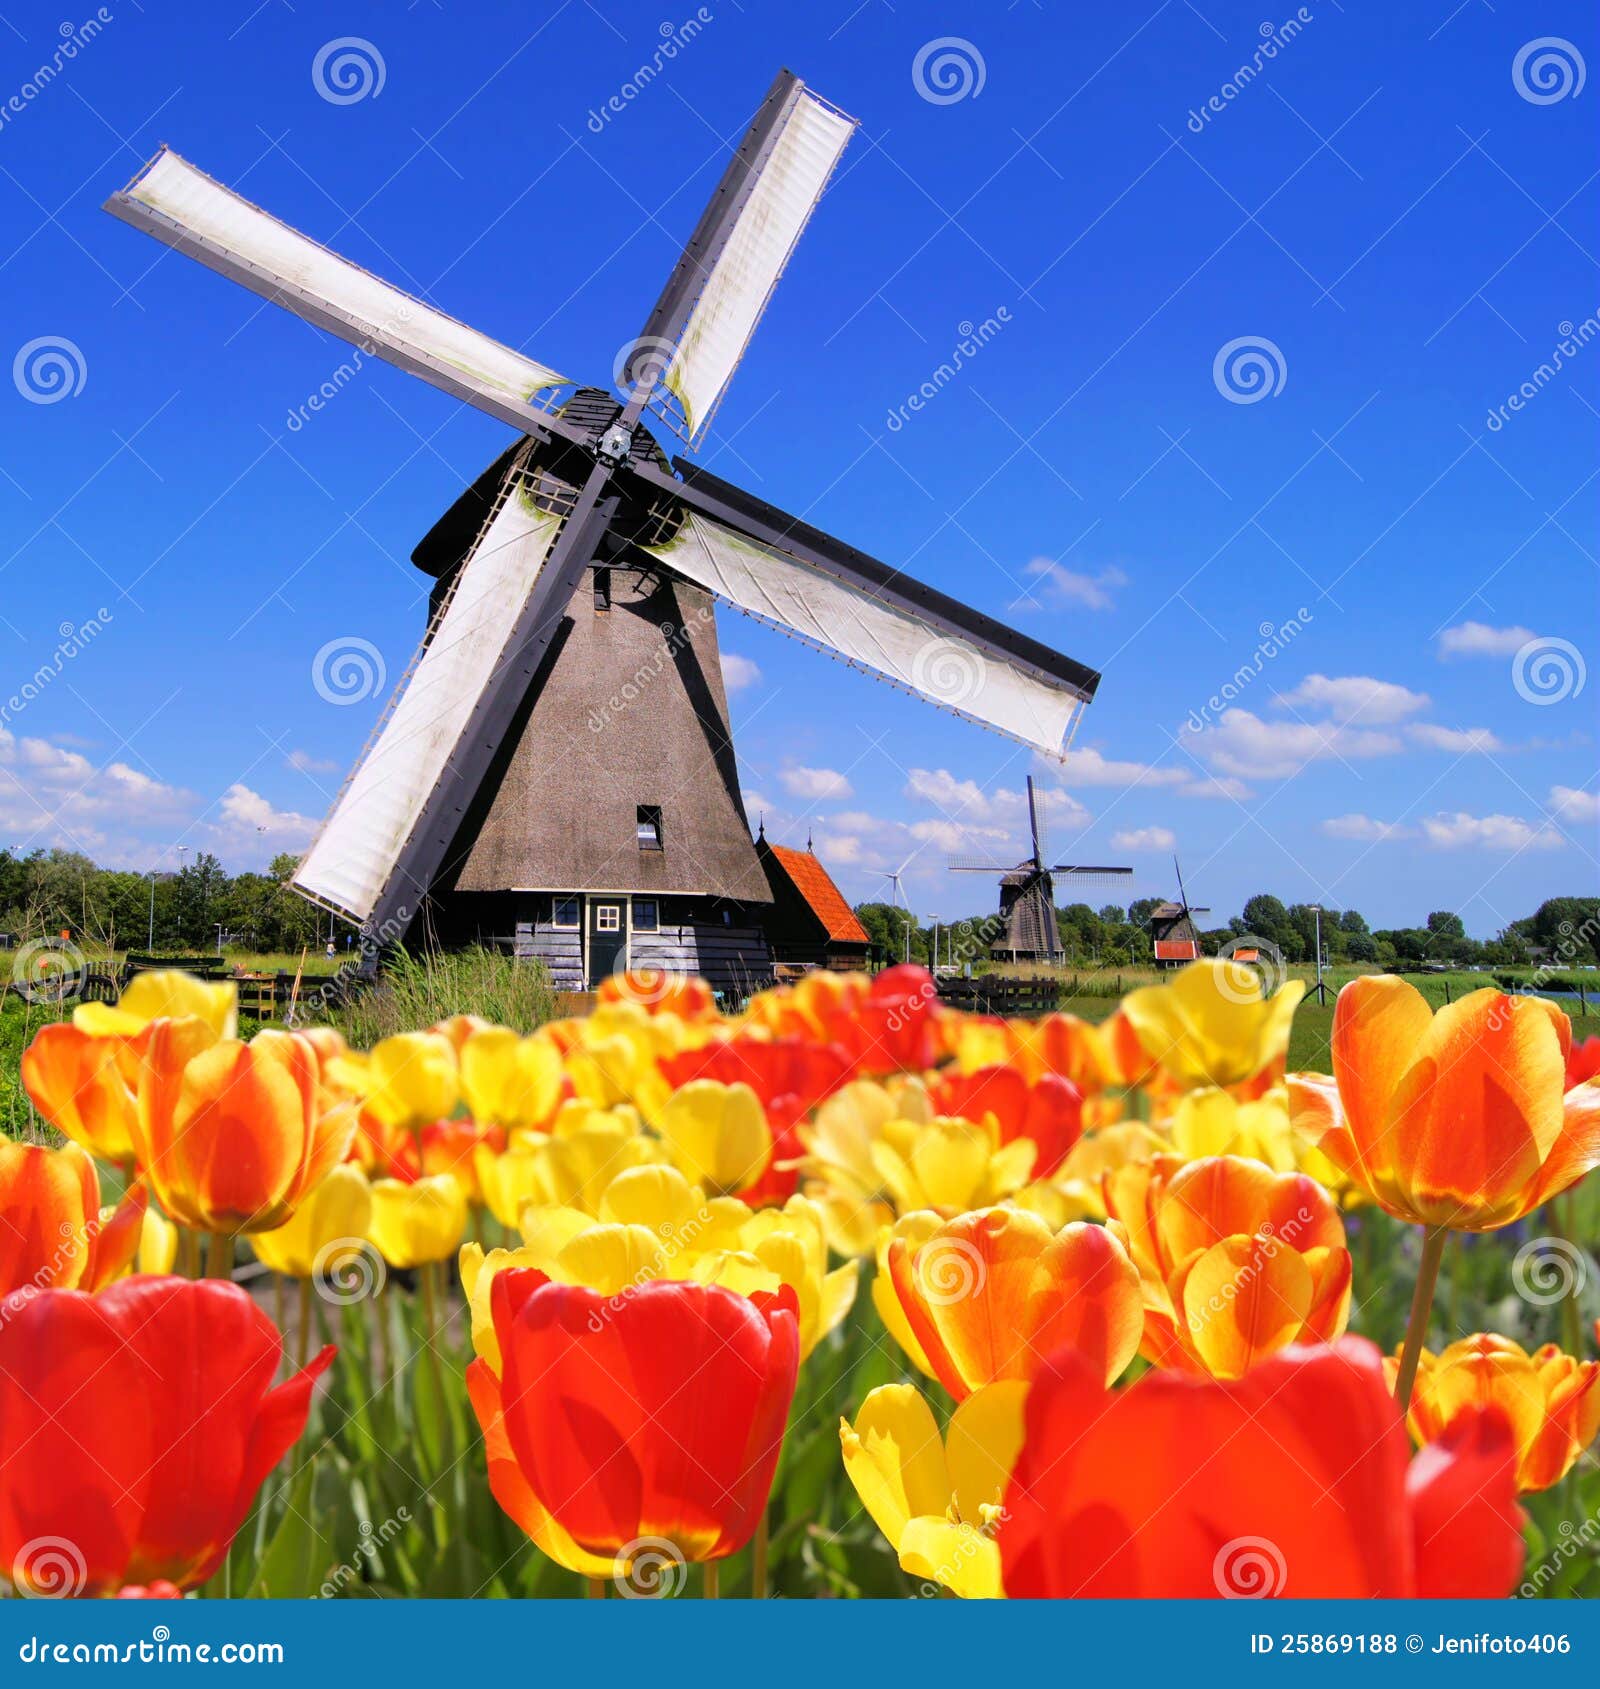 dutch tulips and windmills